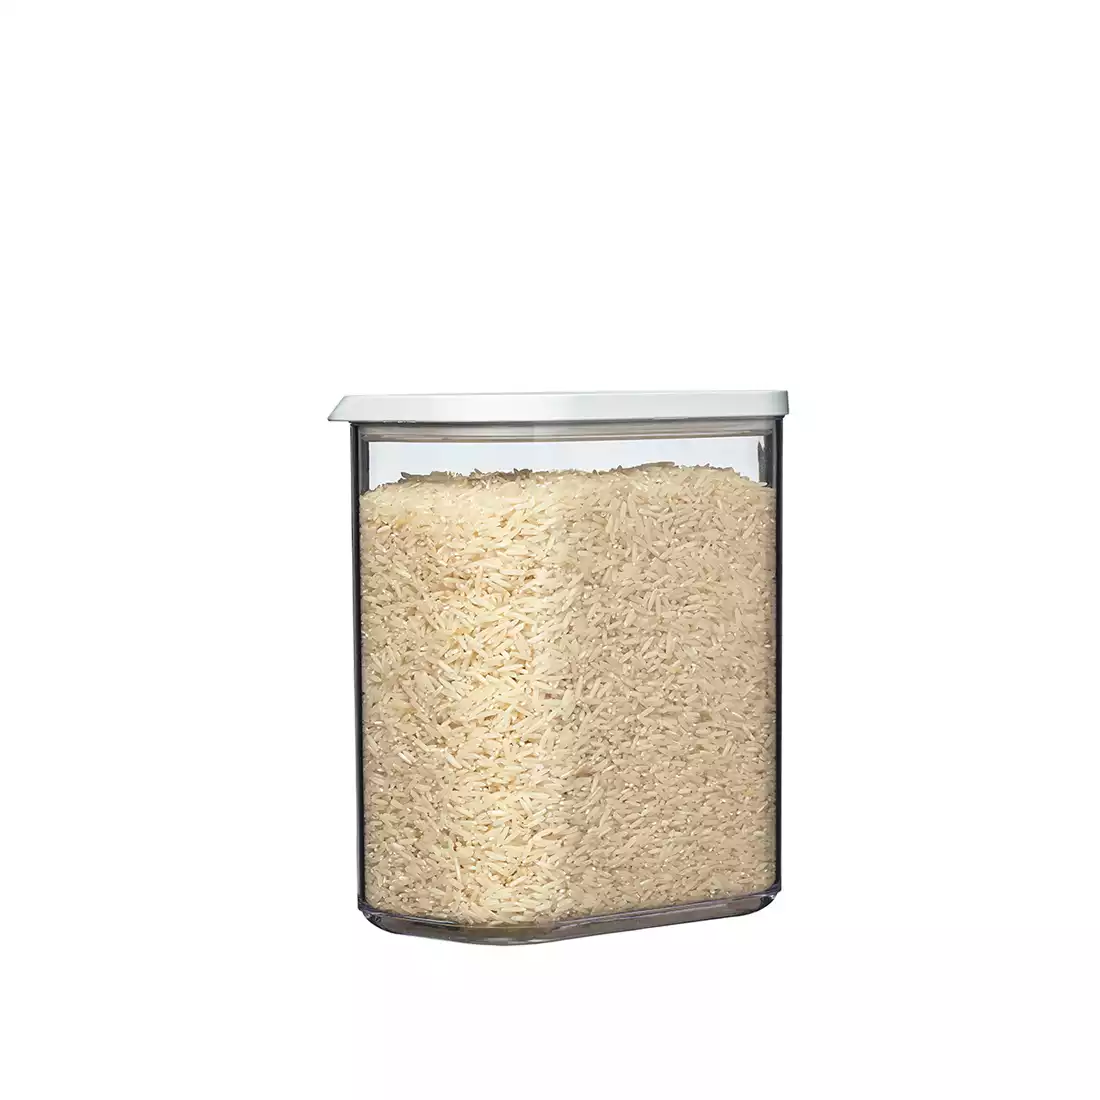 MEPAL MODULA nádoba na potraviny 1500 ml, biela